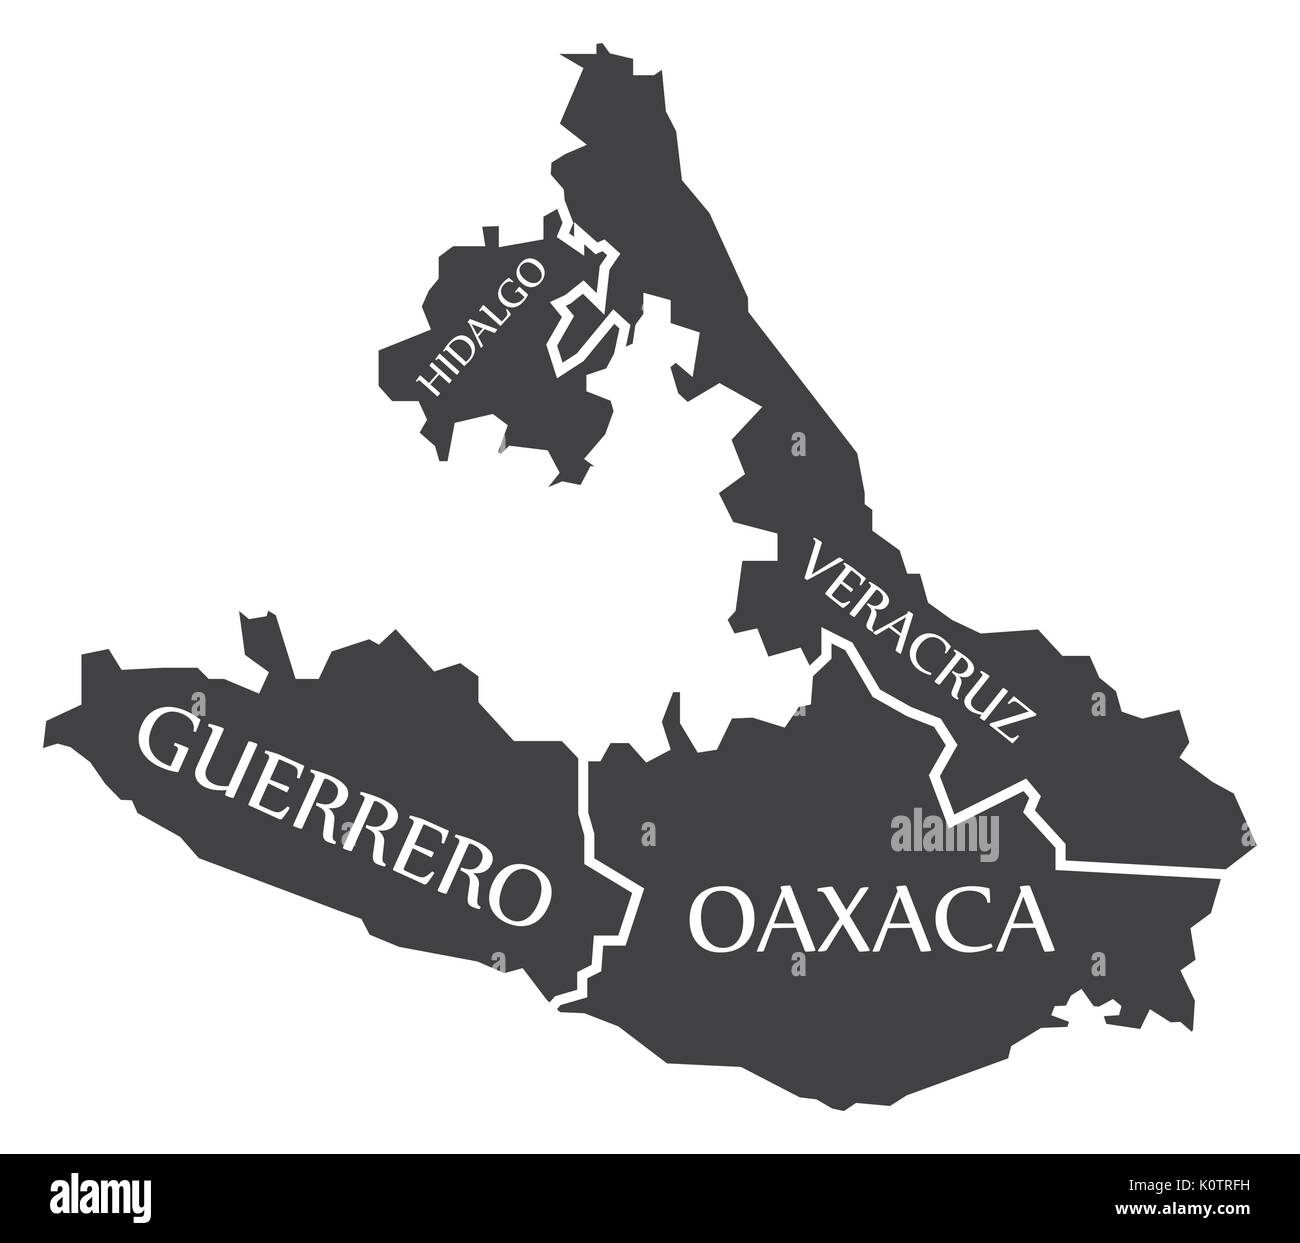 Hidalgo - Veracruz - Oaxaca - Guerrero Map Mexico illustration Stock Vector